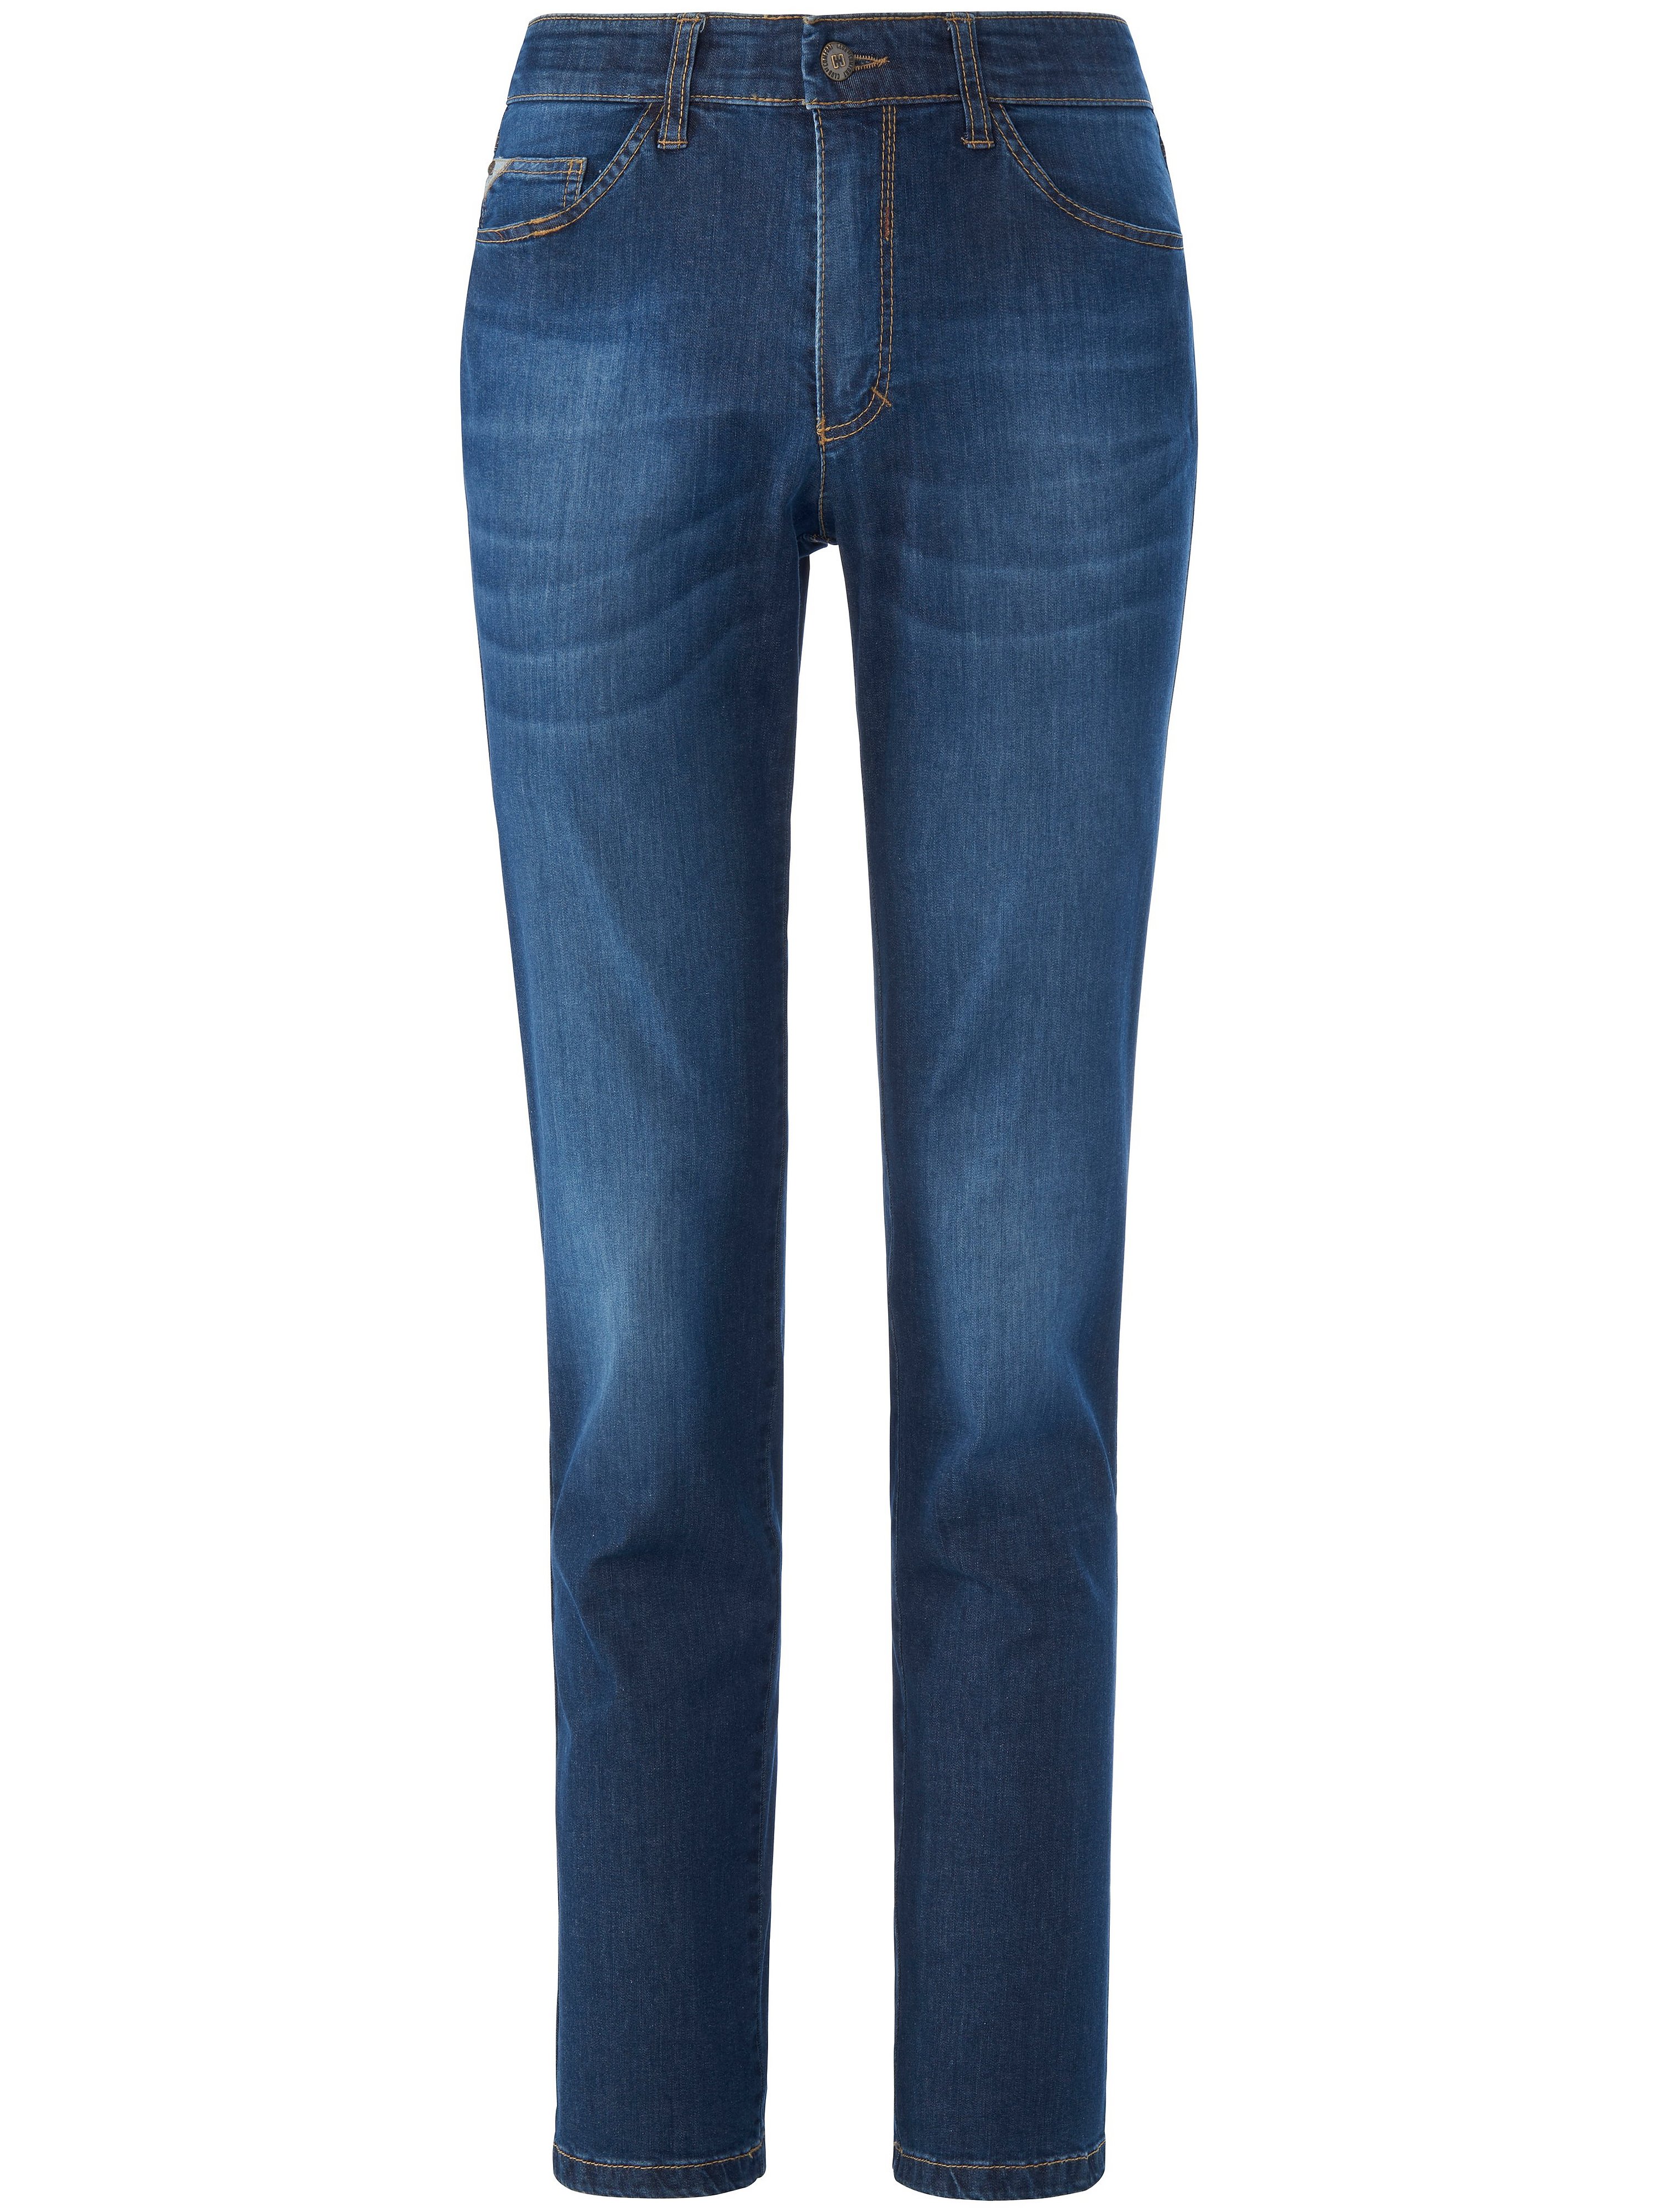 Le jean Regular Fit modèle Henry  CLUB OF COMFORT denim taille 46